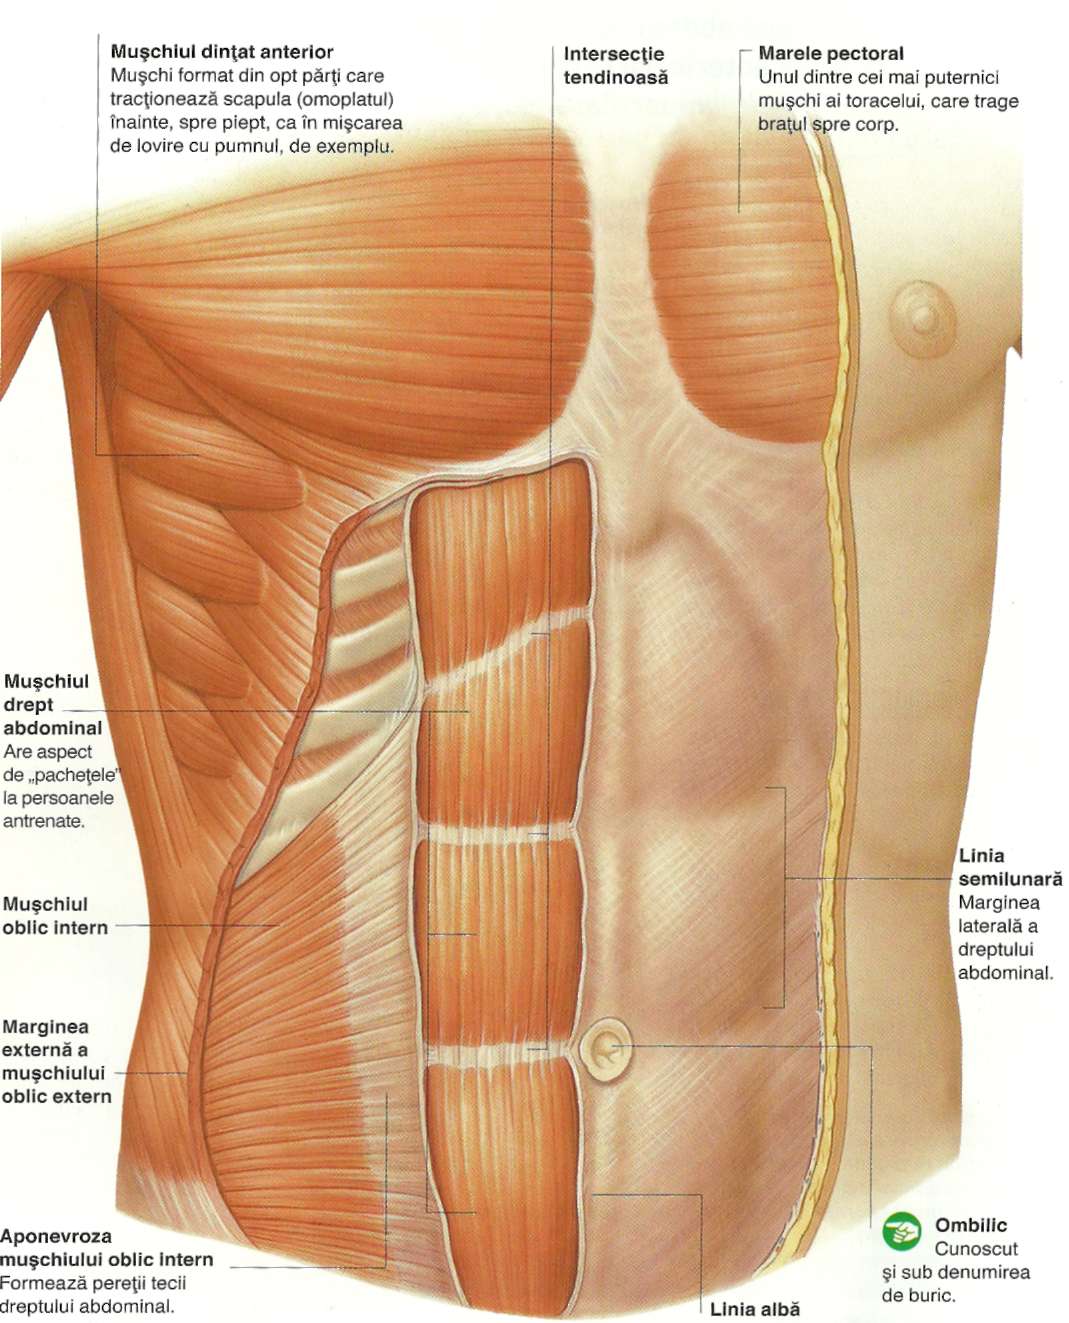 Muschii toraco-abdominali clasificare